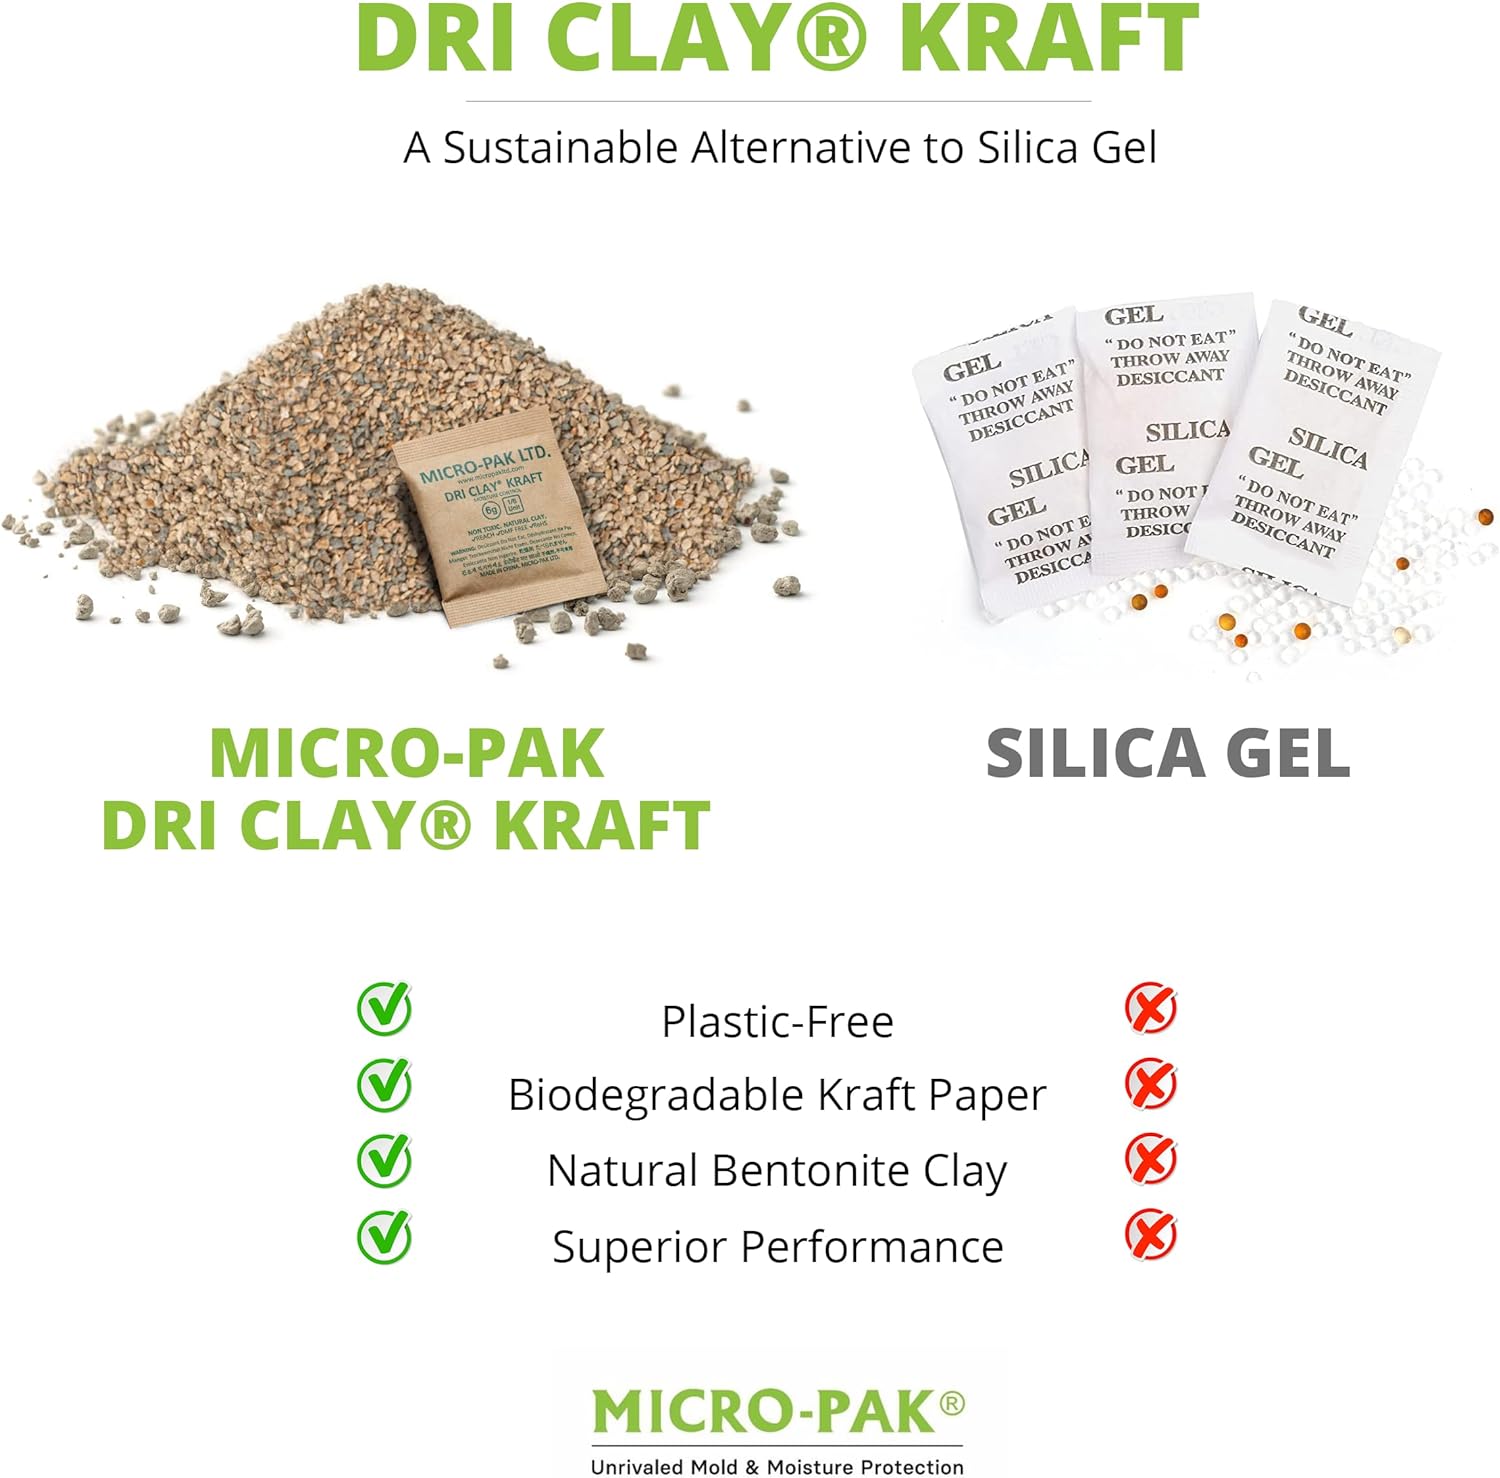 micro pak dri clay kraft review